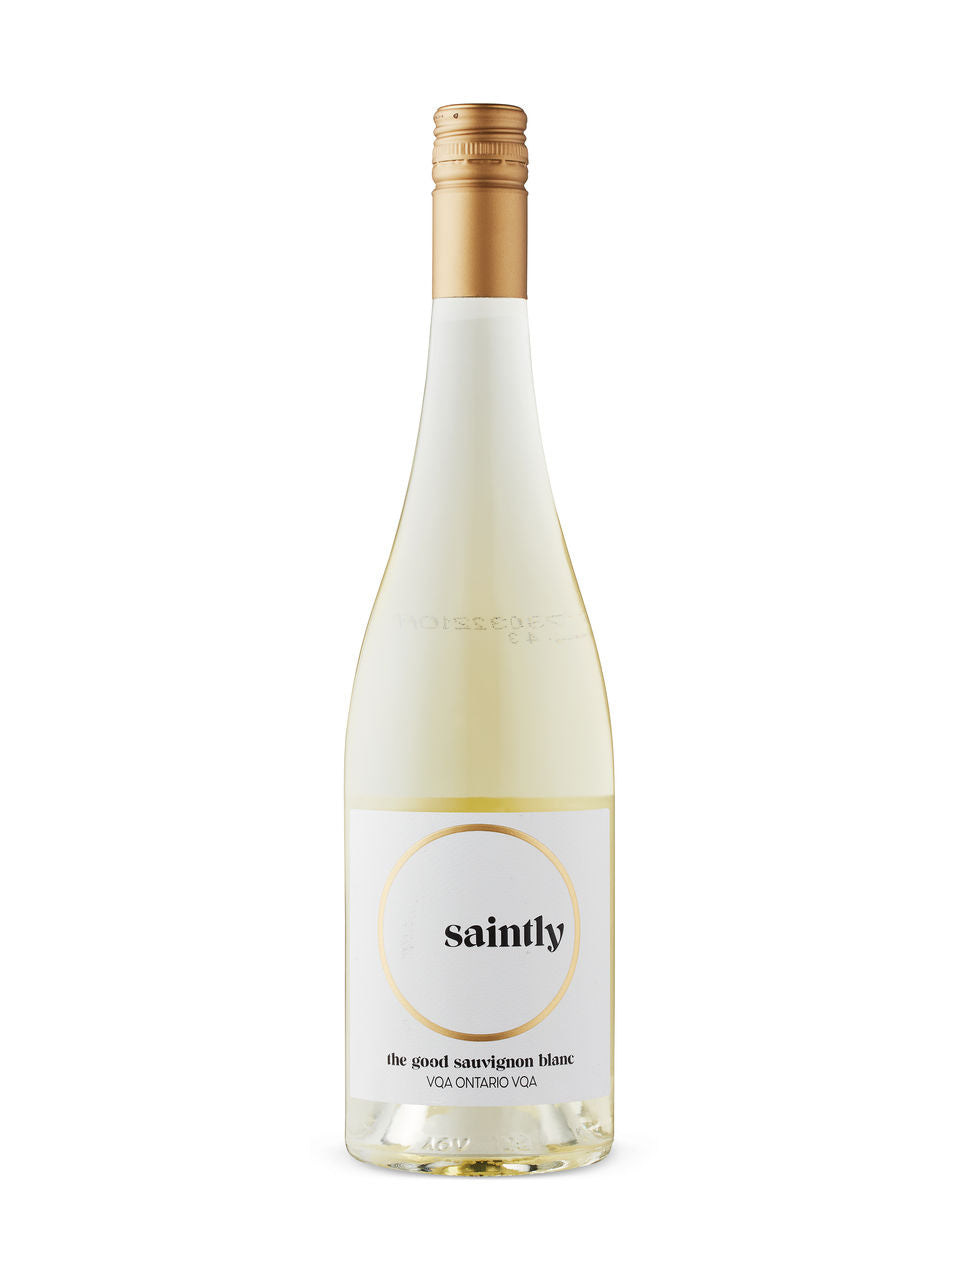 Saintly The Good Sauvignon Blanc VQA 750 ml bottle